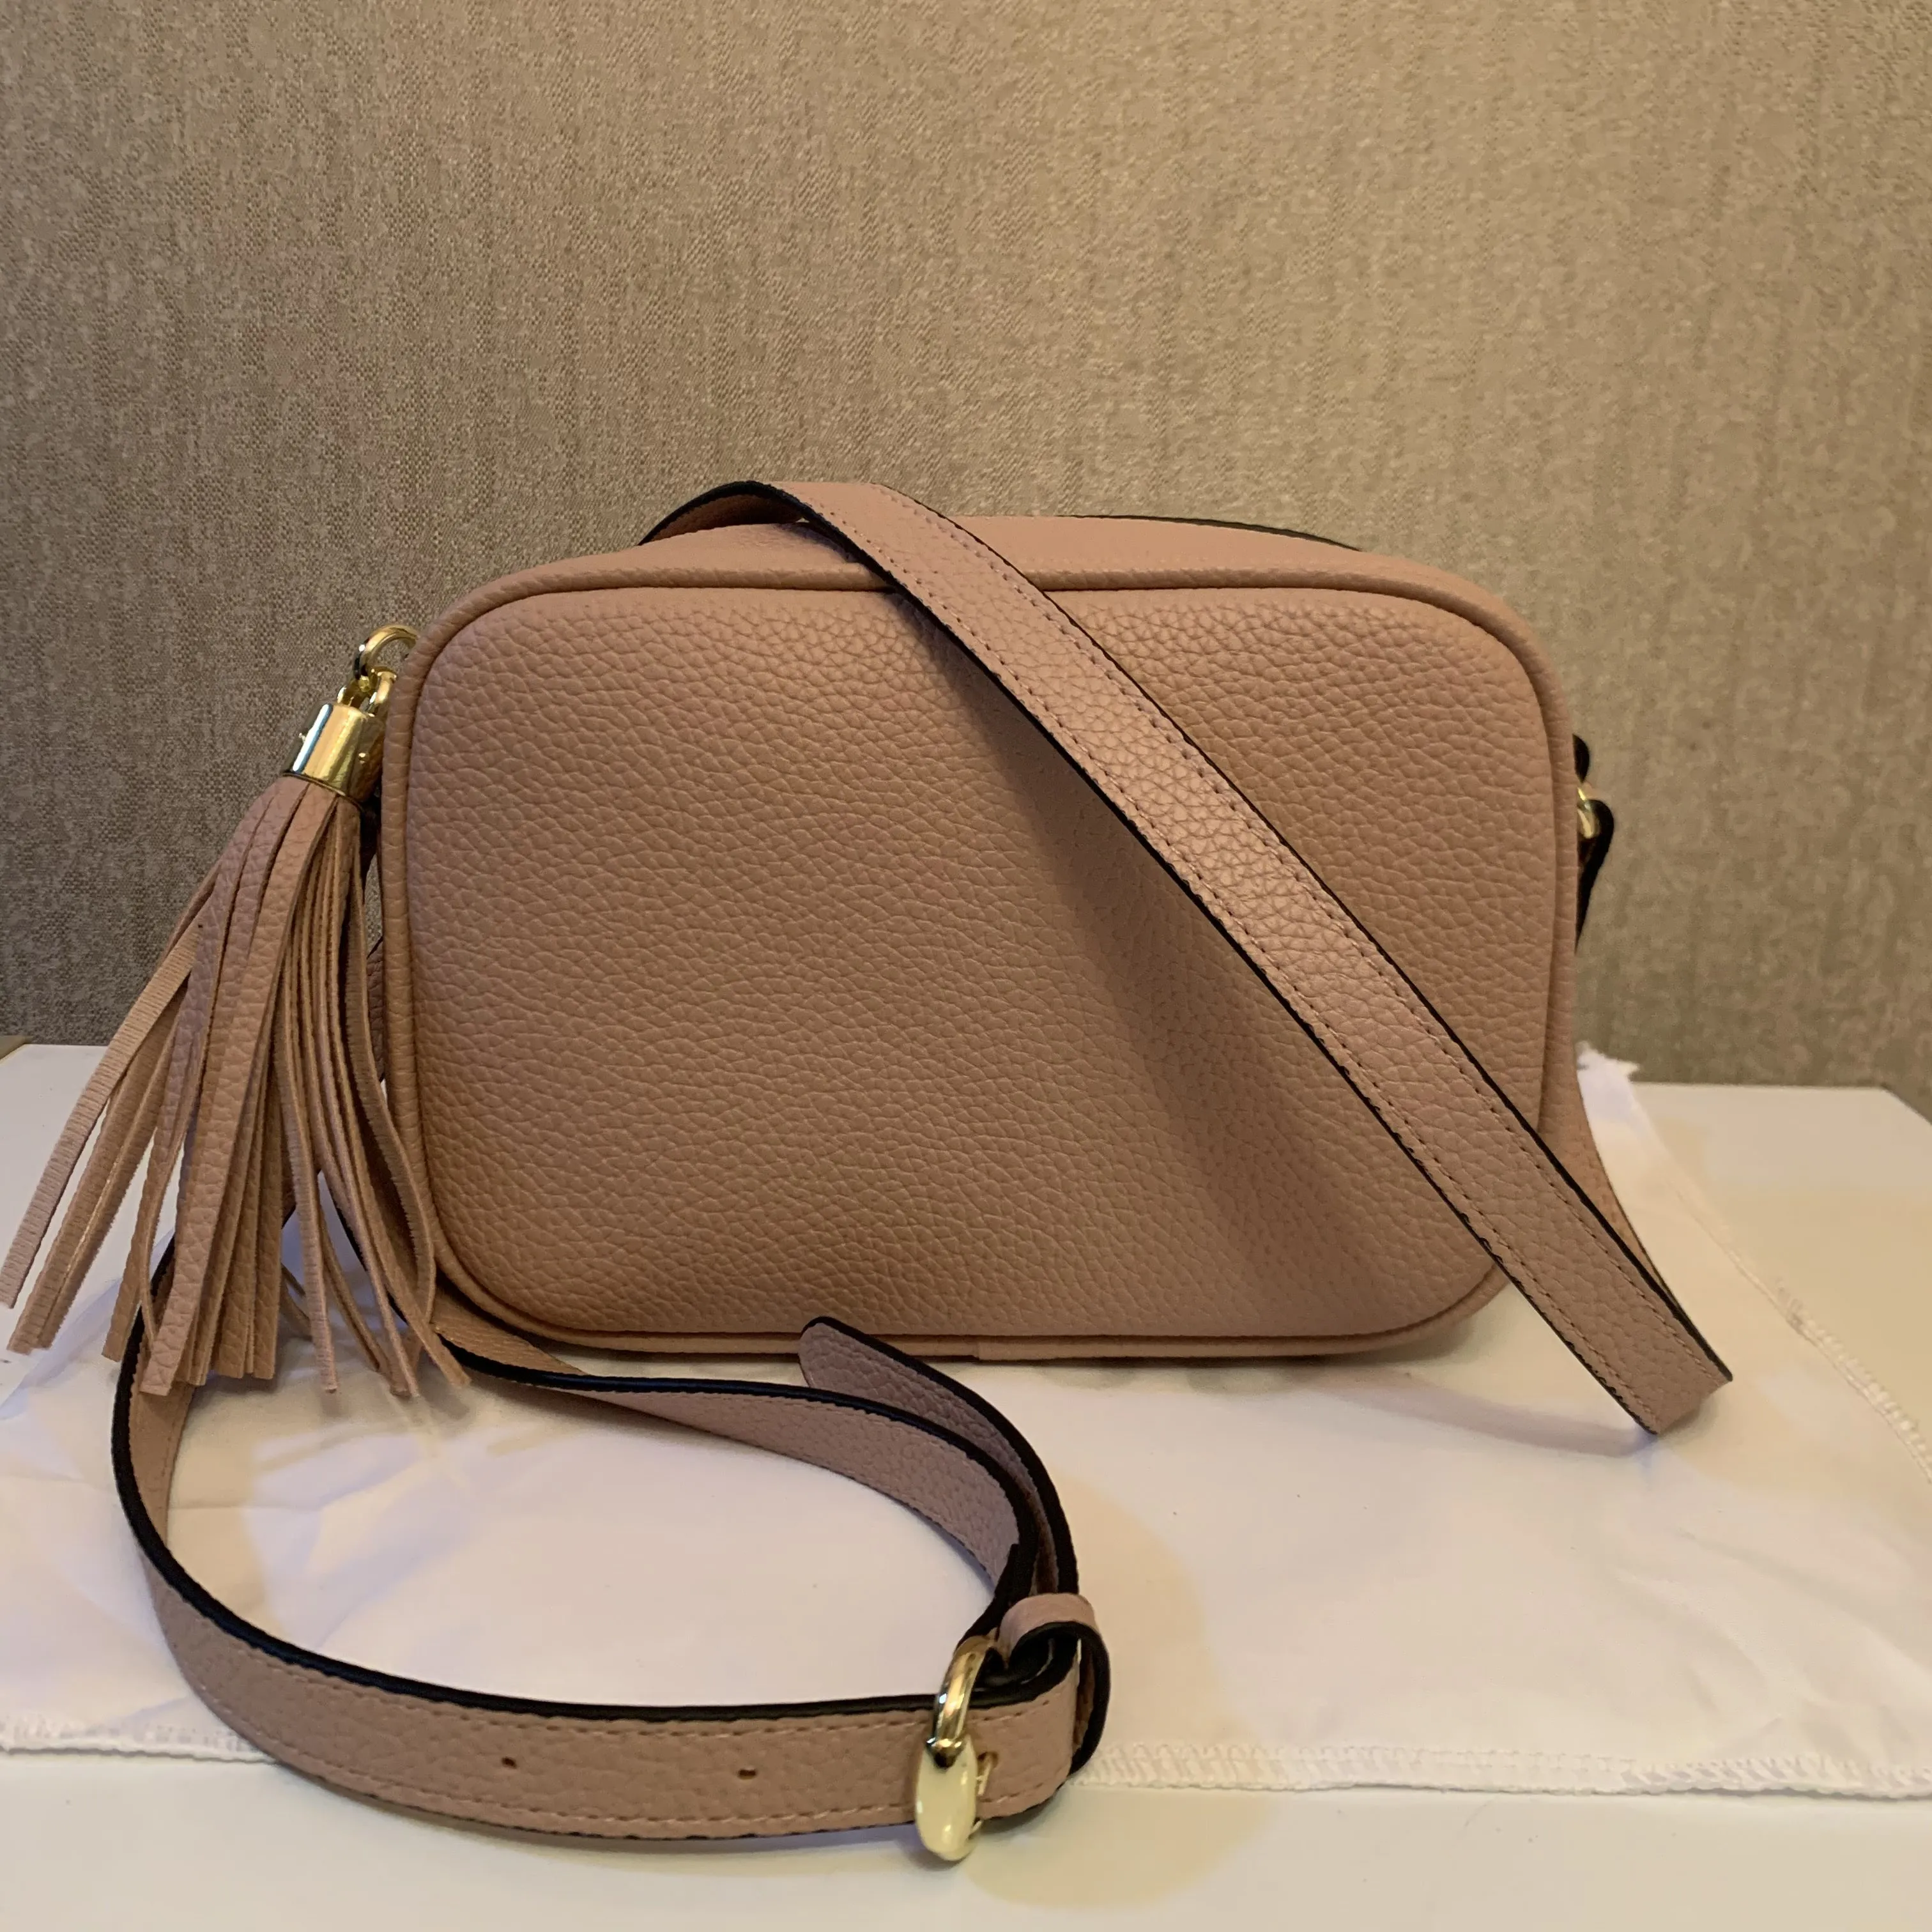 Top Quality NEW Designer Handbags Wallet Handbag Women Handbags Bags Crossbody Soho Bag Disco Shoulder Bag Fringed Messenger Bags Purse 22cm